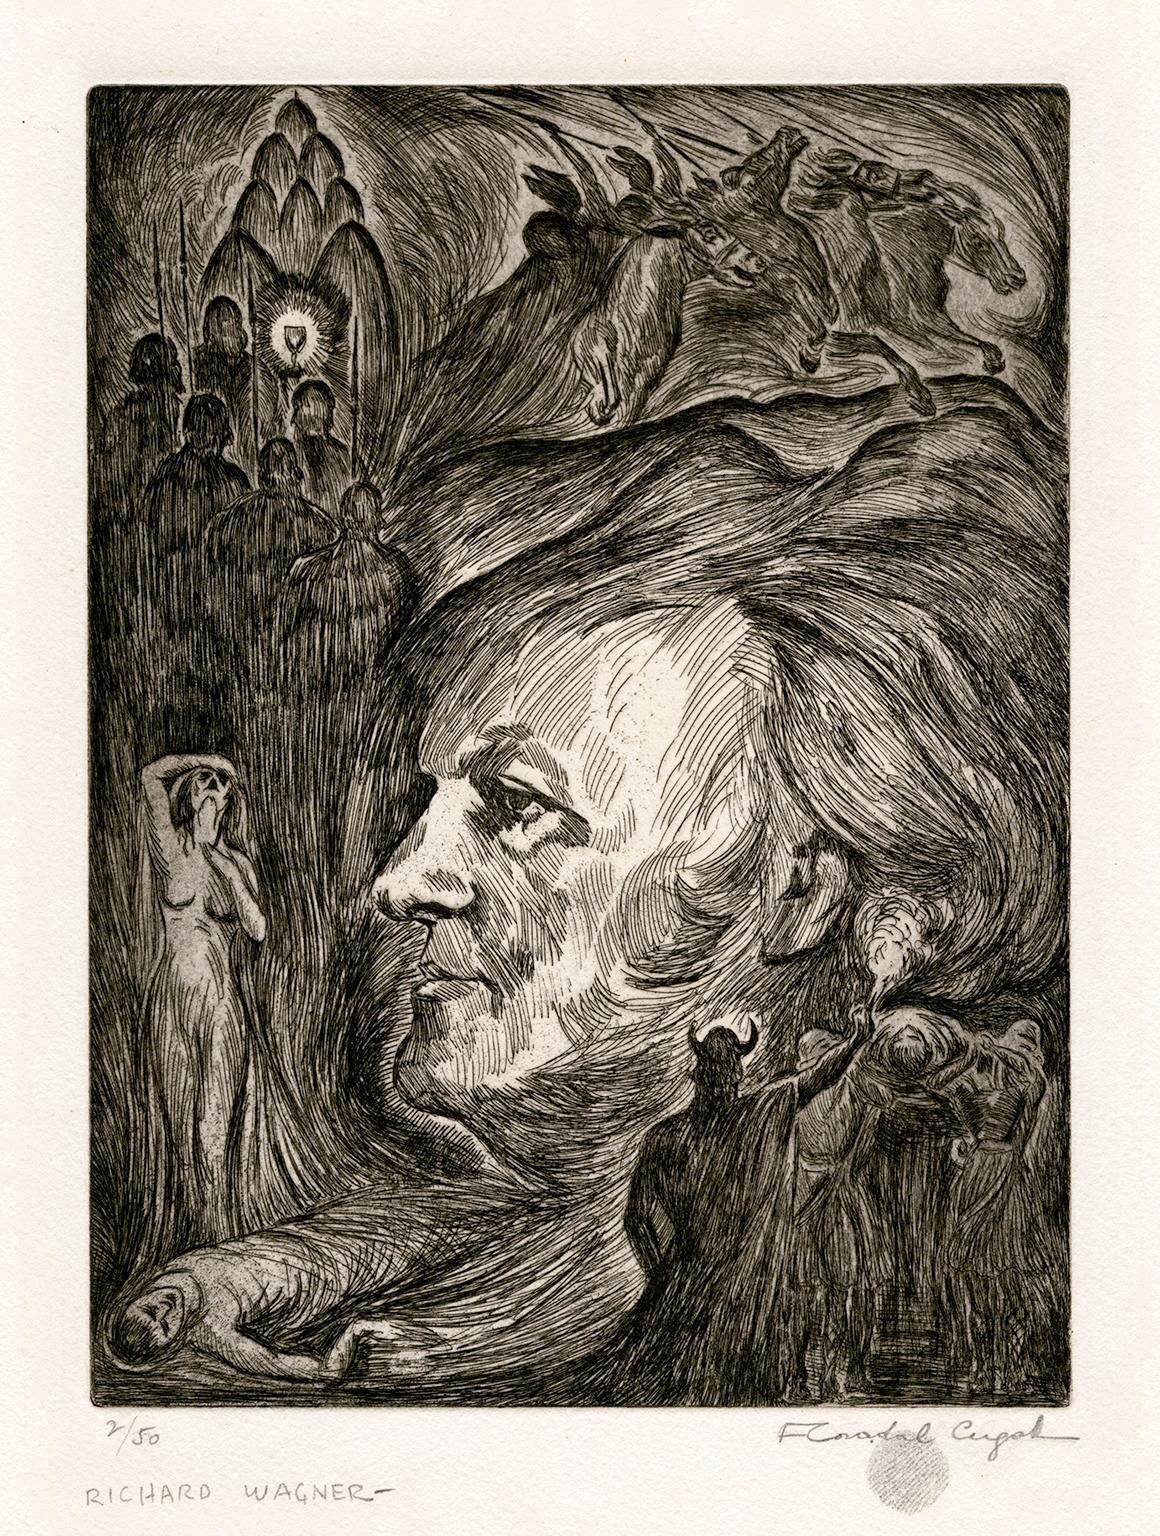 Francis Coradal-Cugat Portrait Print – Richard Wagner" - Porträt des Komponisten aus den 1920er Jahren